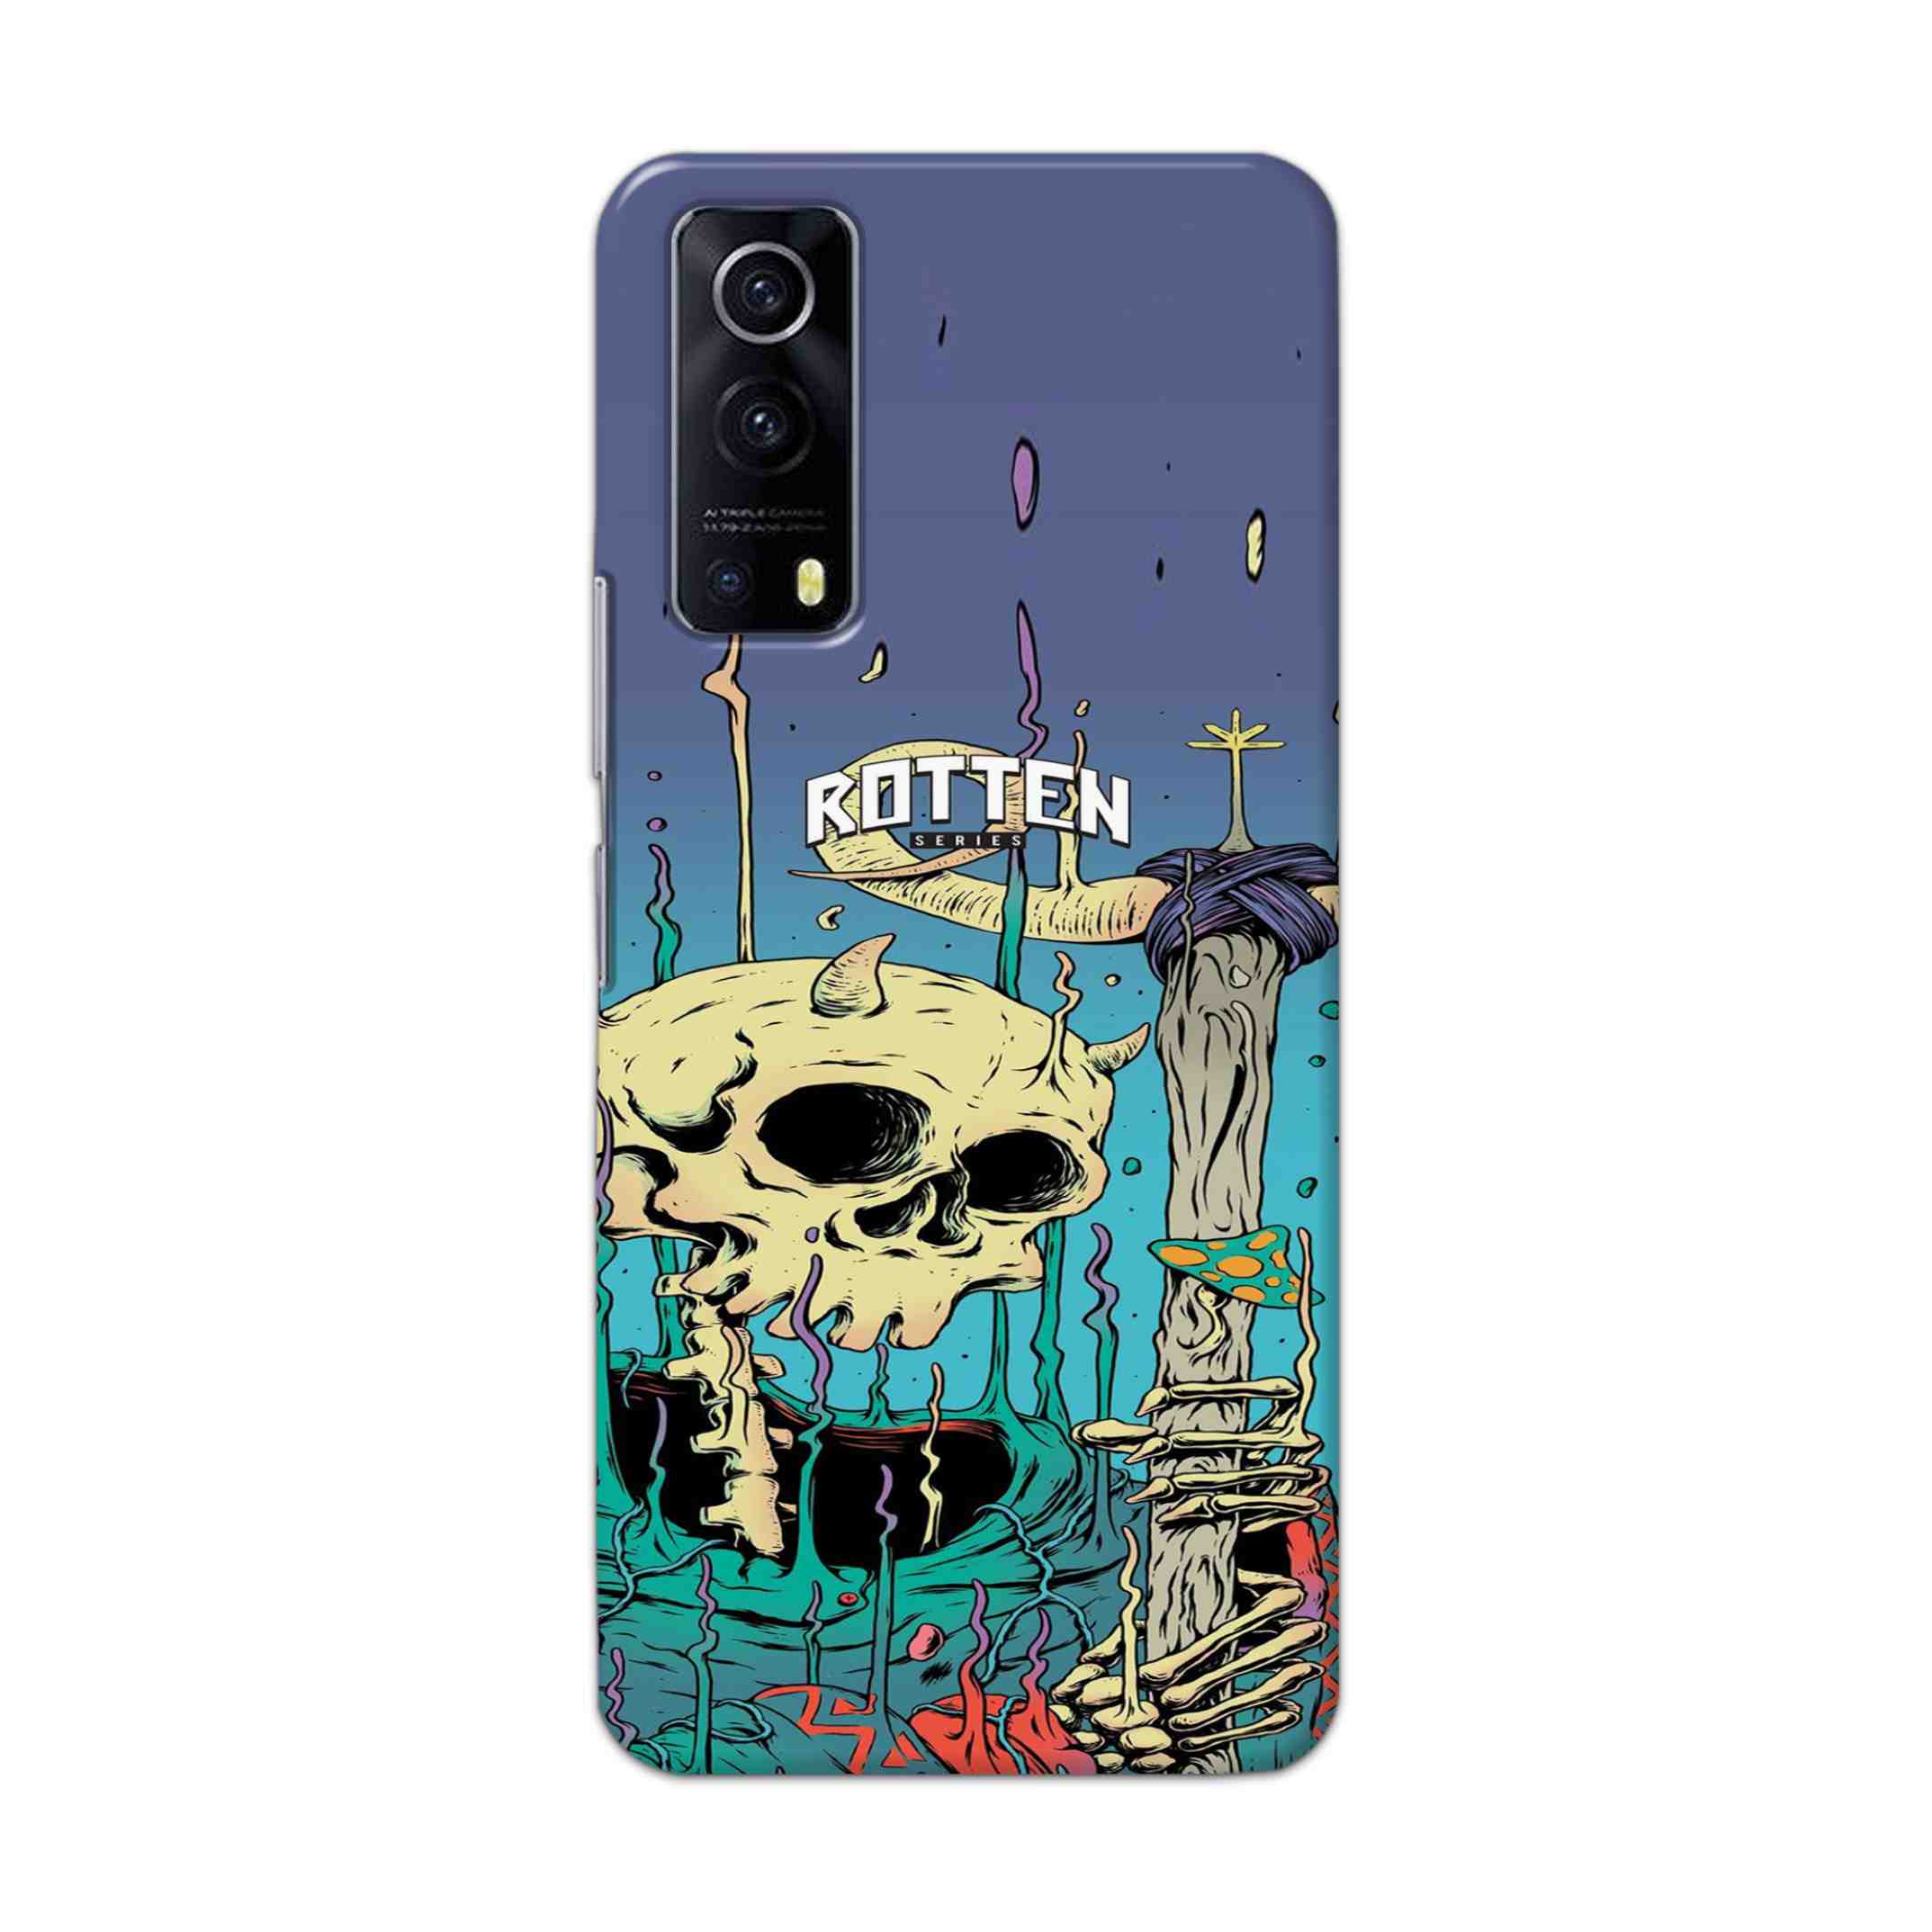 Buy Skull Hard Back Mobile Phone Case Cover For Vivo IQOO Z3 Online